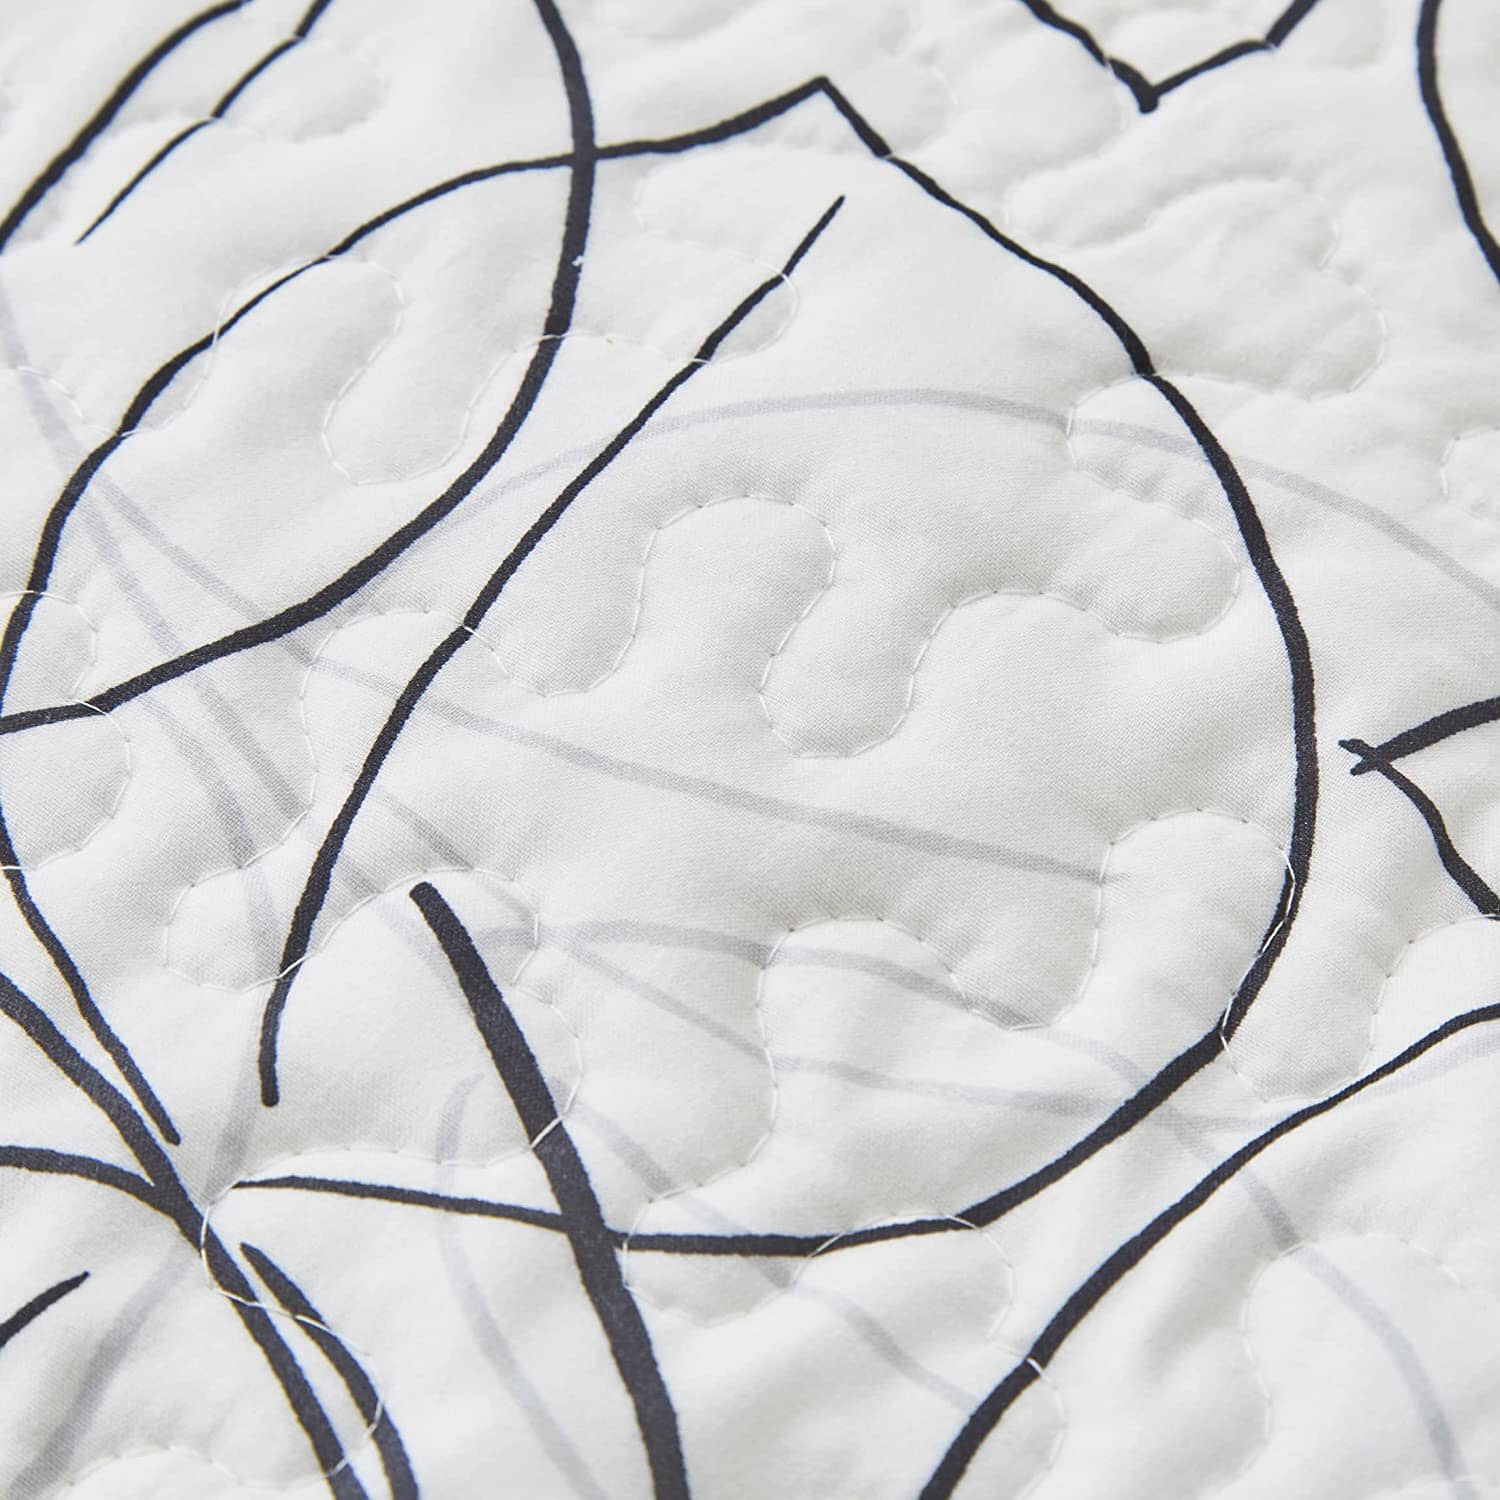 Tache Modern Abstract Leaf Line Art Foliage White Grey Black Gold Cushion Covers / Euro Sham (TJ3571) - Tache Home Fashion